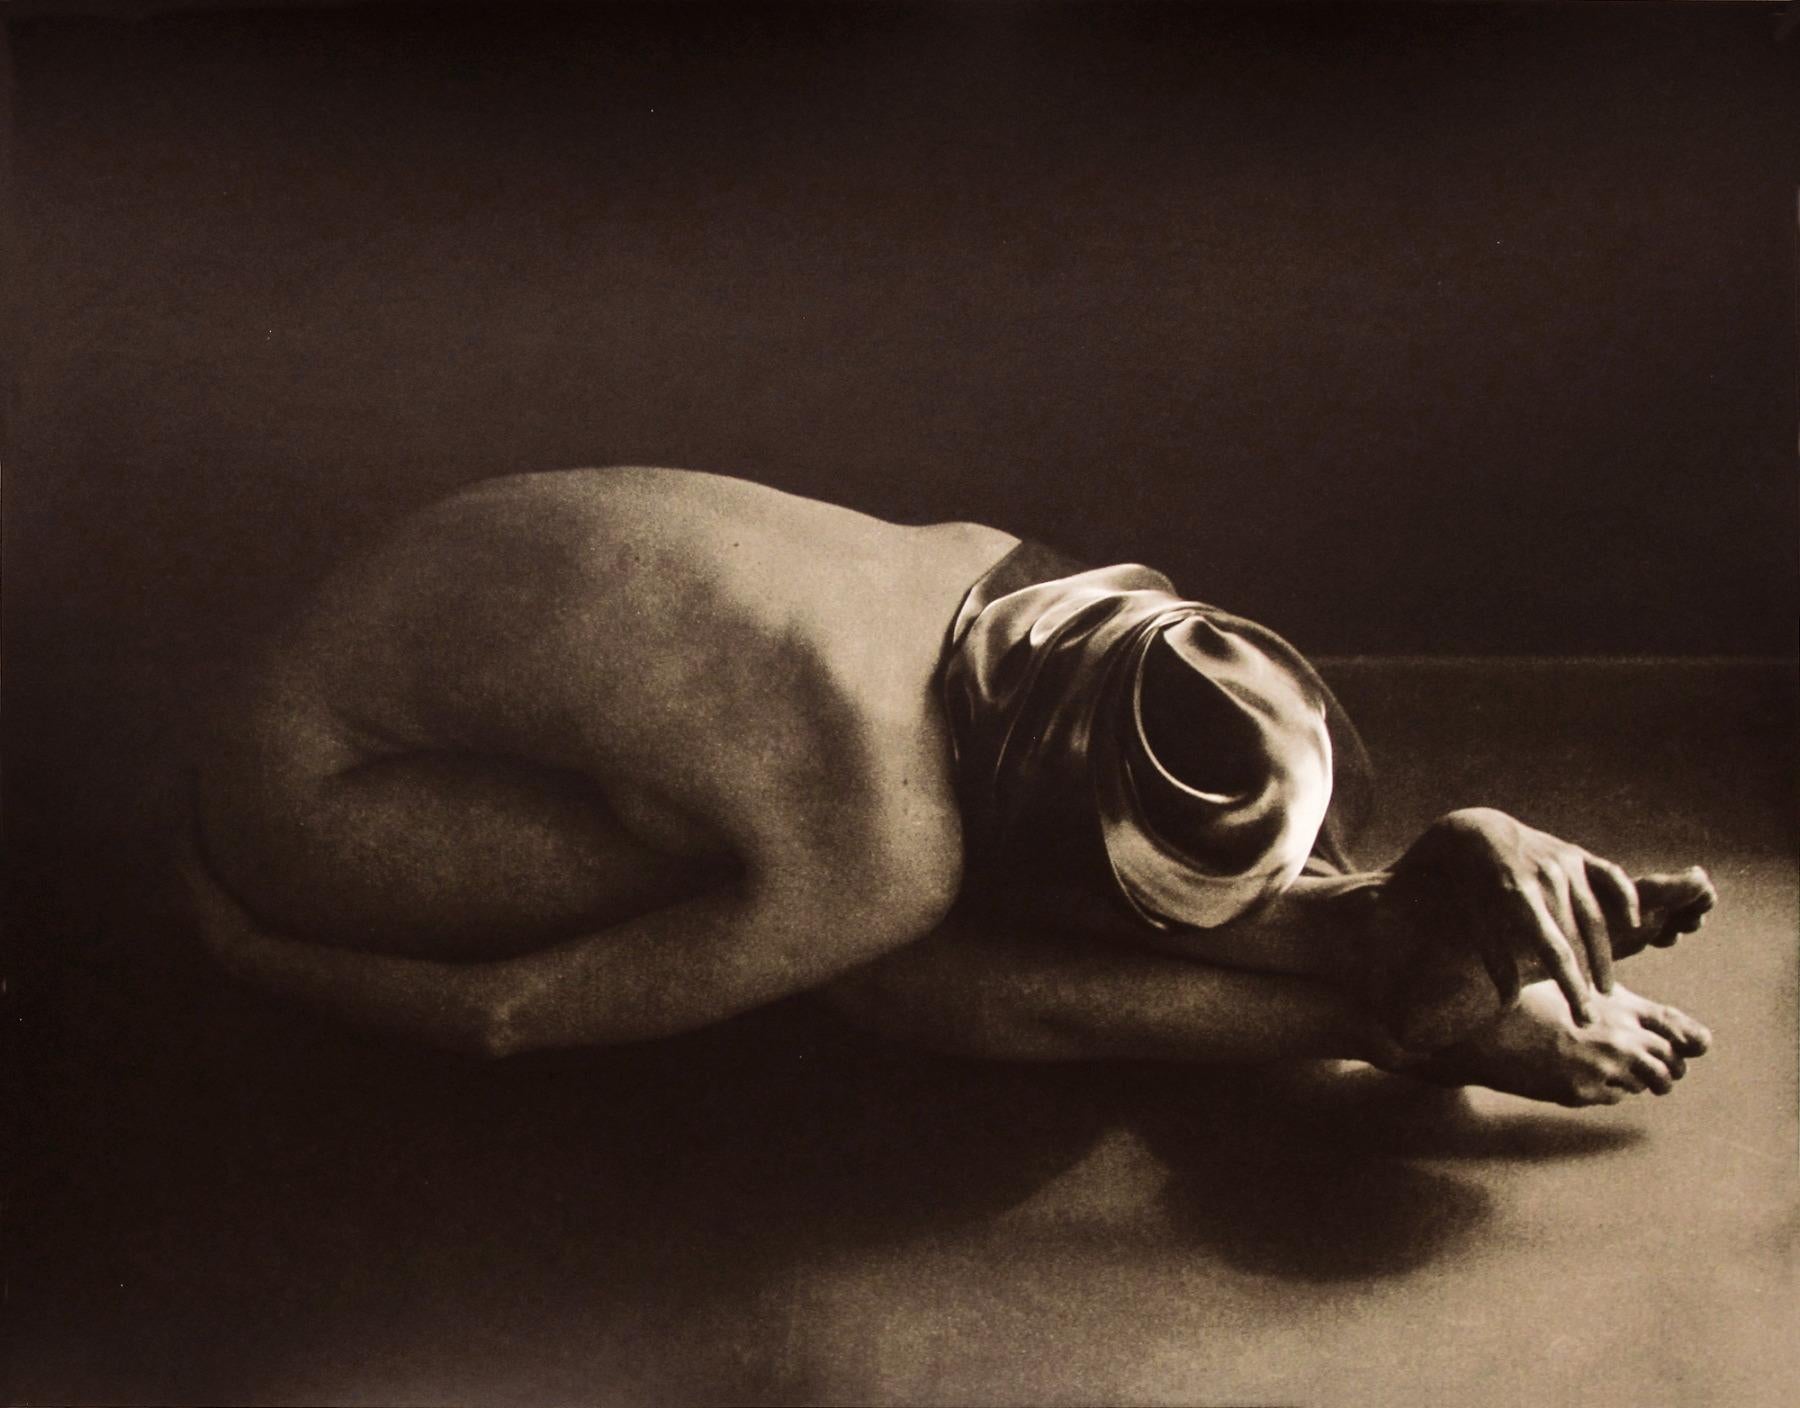 John Casado Nude Photograph - Figure Untitled 1015 - lith silver gelatin print 16x20 in